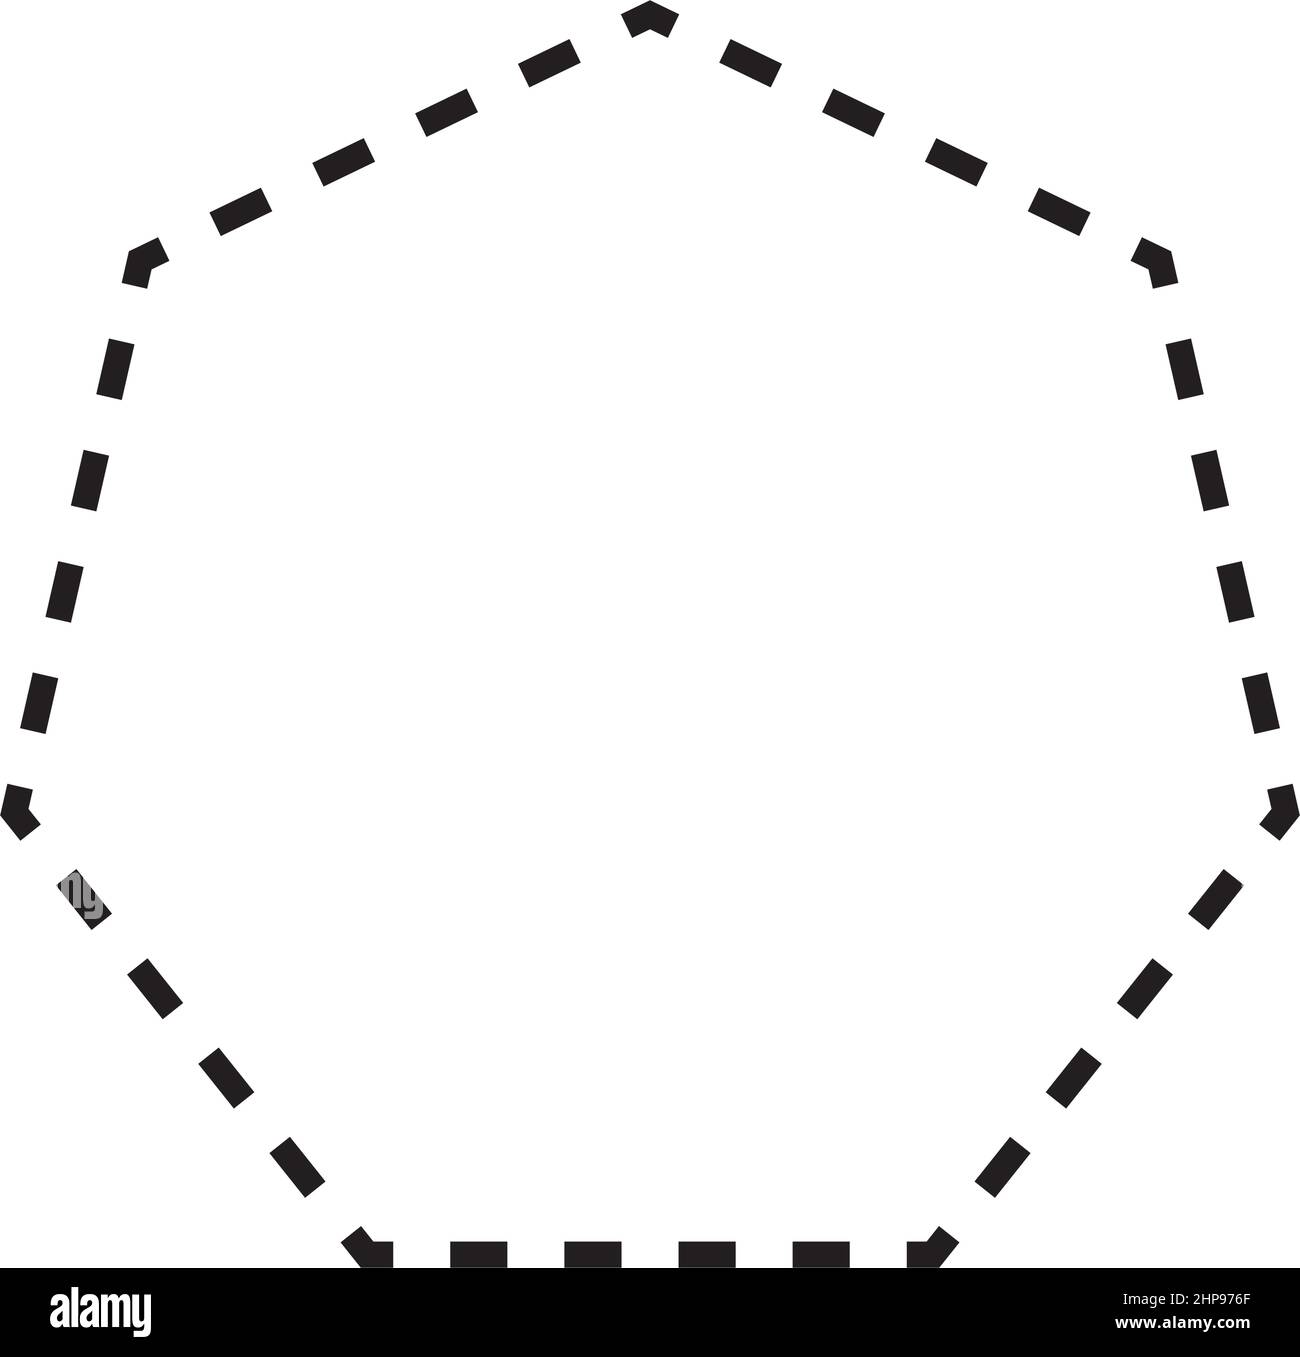 Heptagon-Symbol gestrichelte Form Vektor-Symbol für kreative Grafik-Design-ui-Element in einer Piktogramm-Illustration Stock Vektor